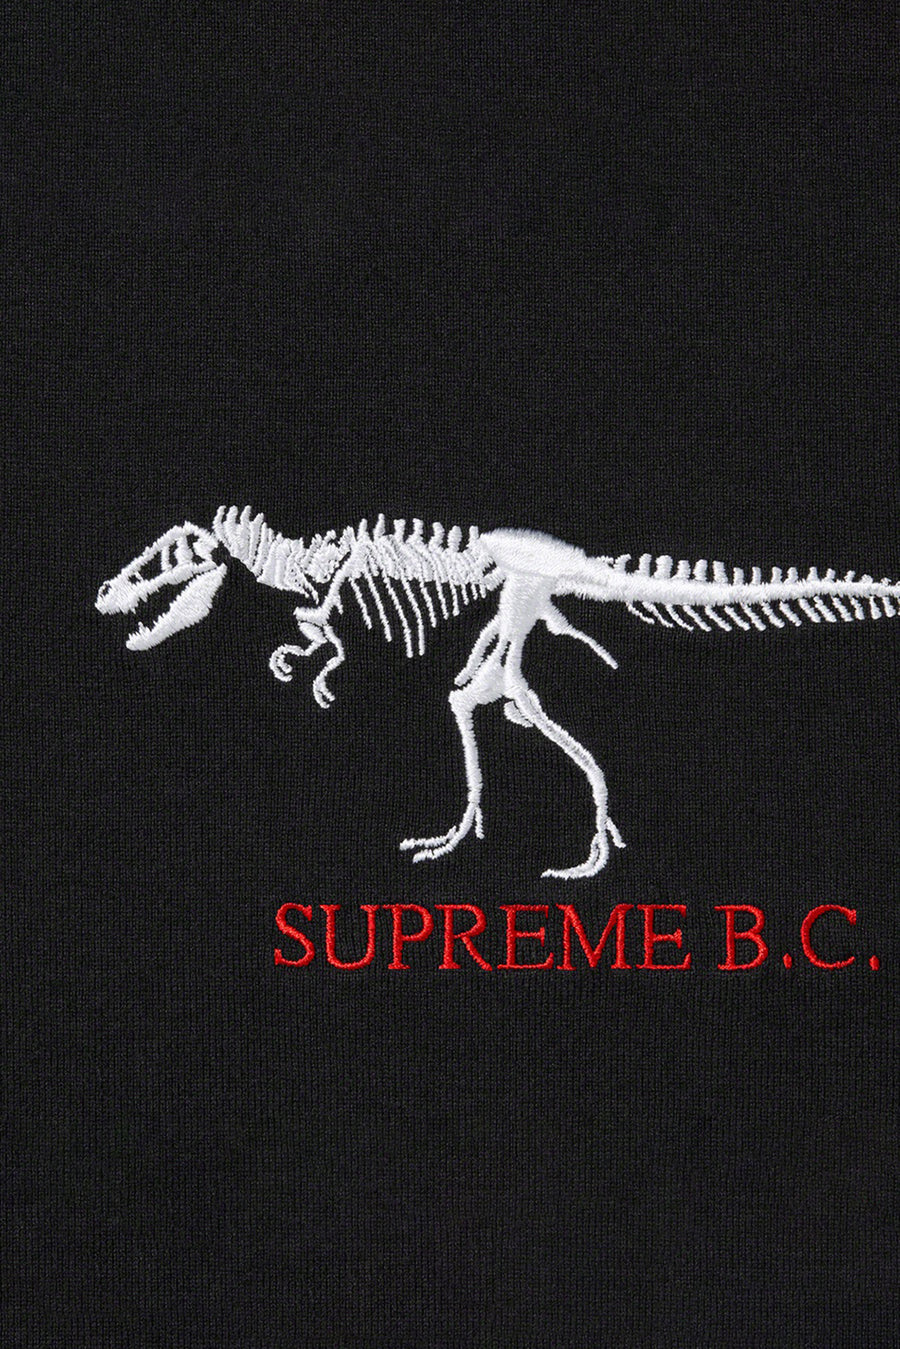 Supreme B.C. T-REX Tee Black – blueandcream